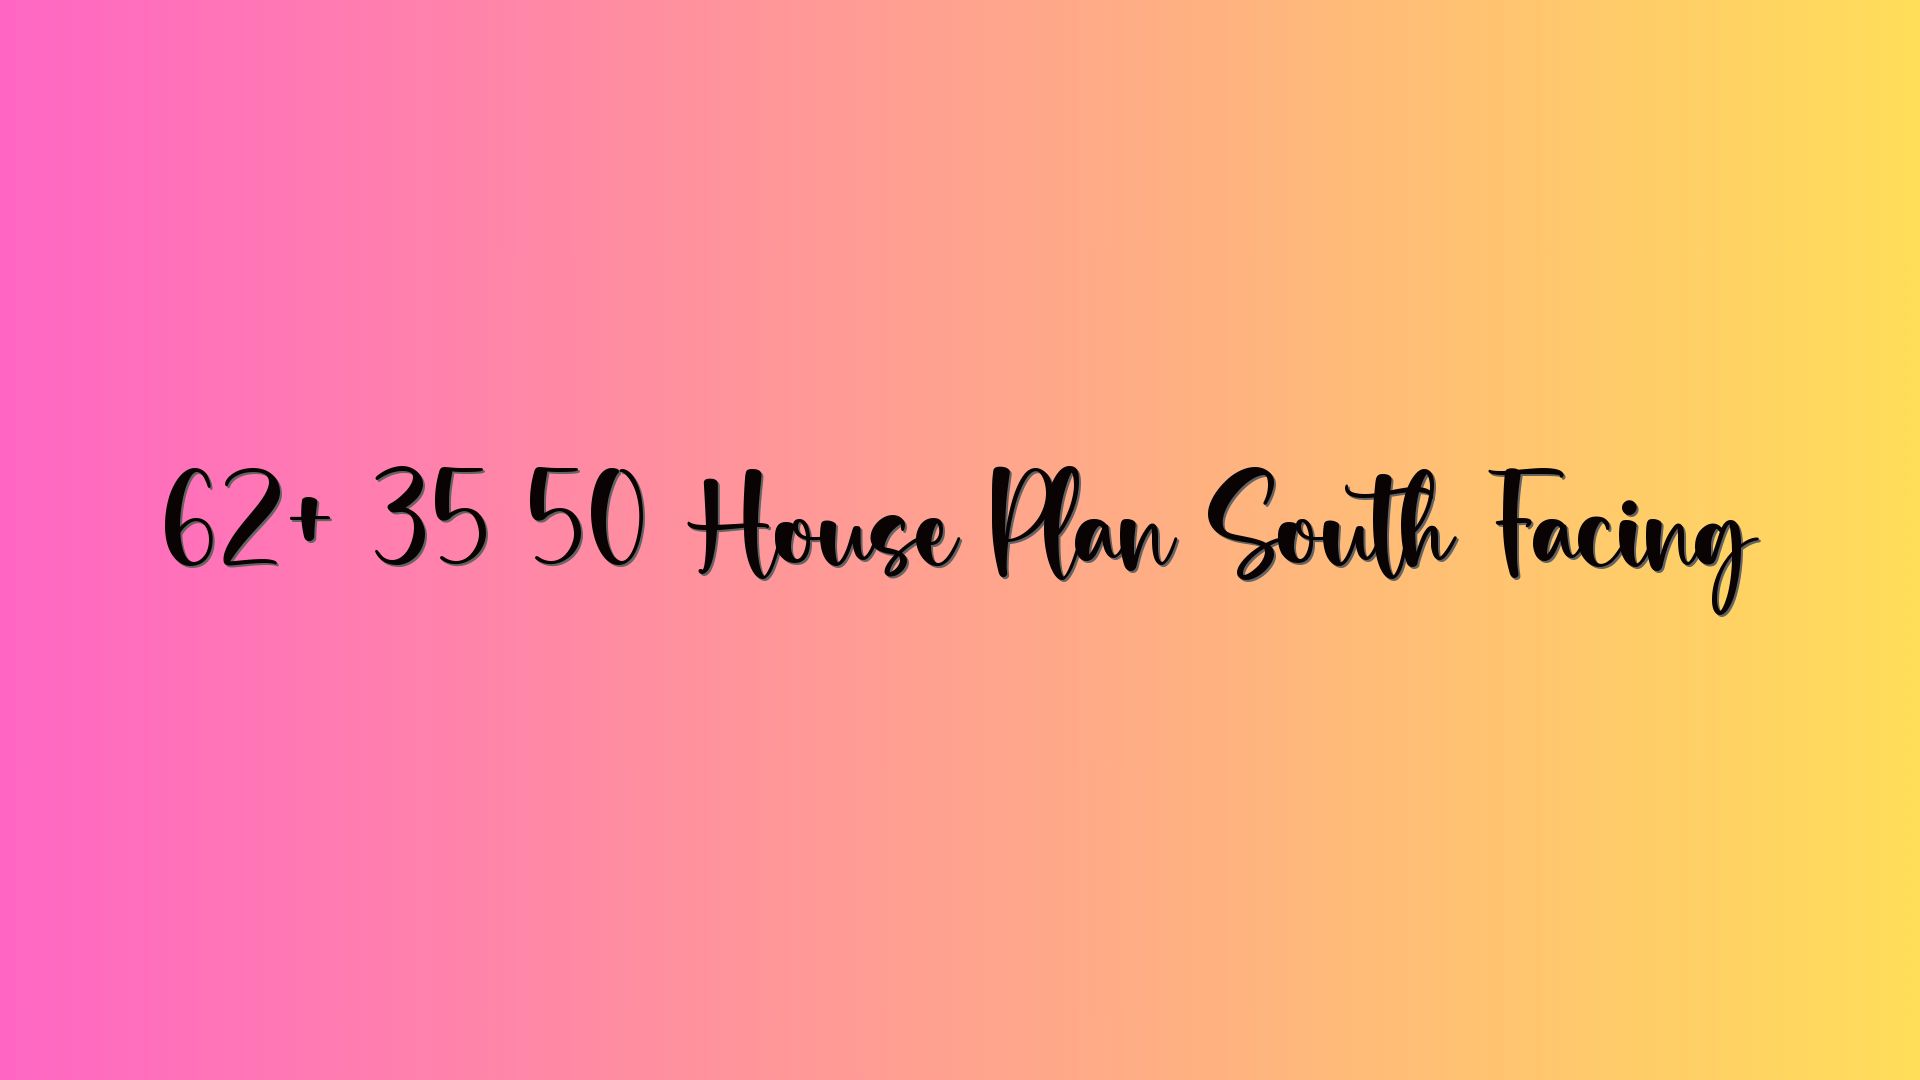 62+ 35 50 House Plan South Facing